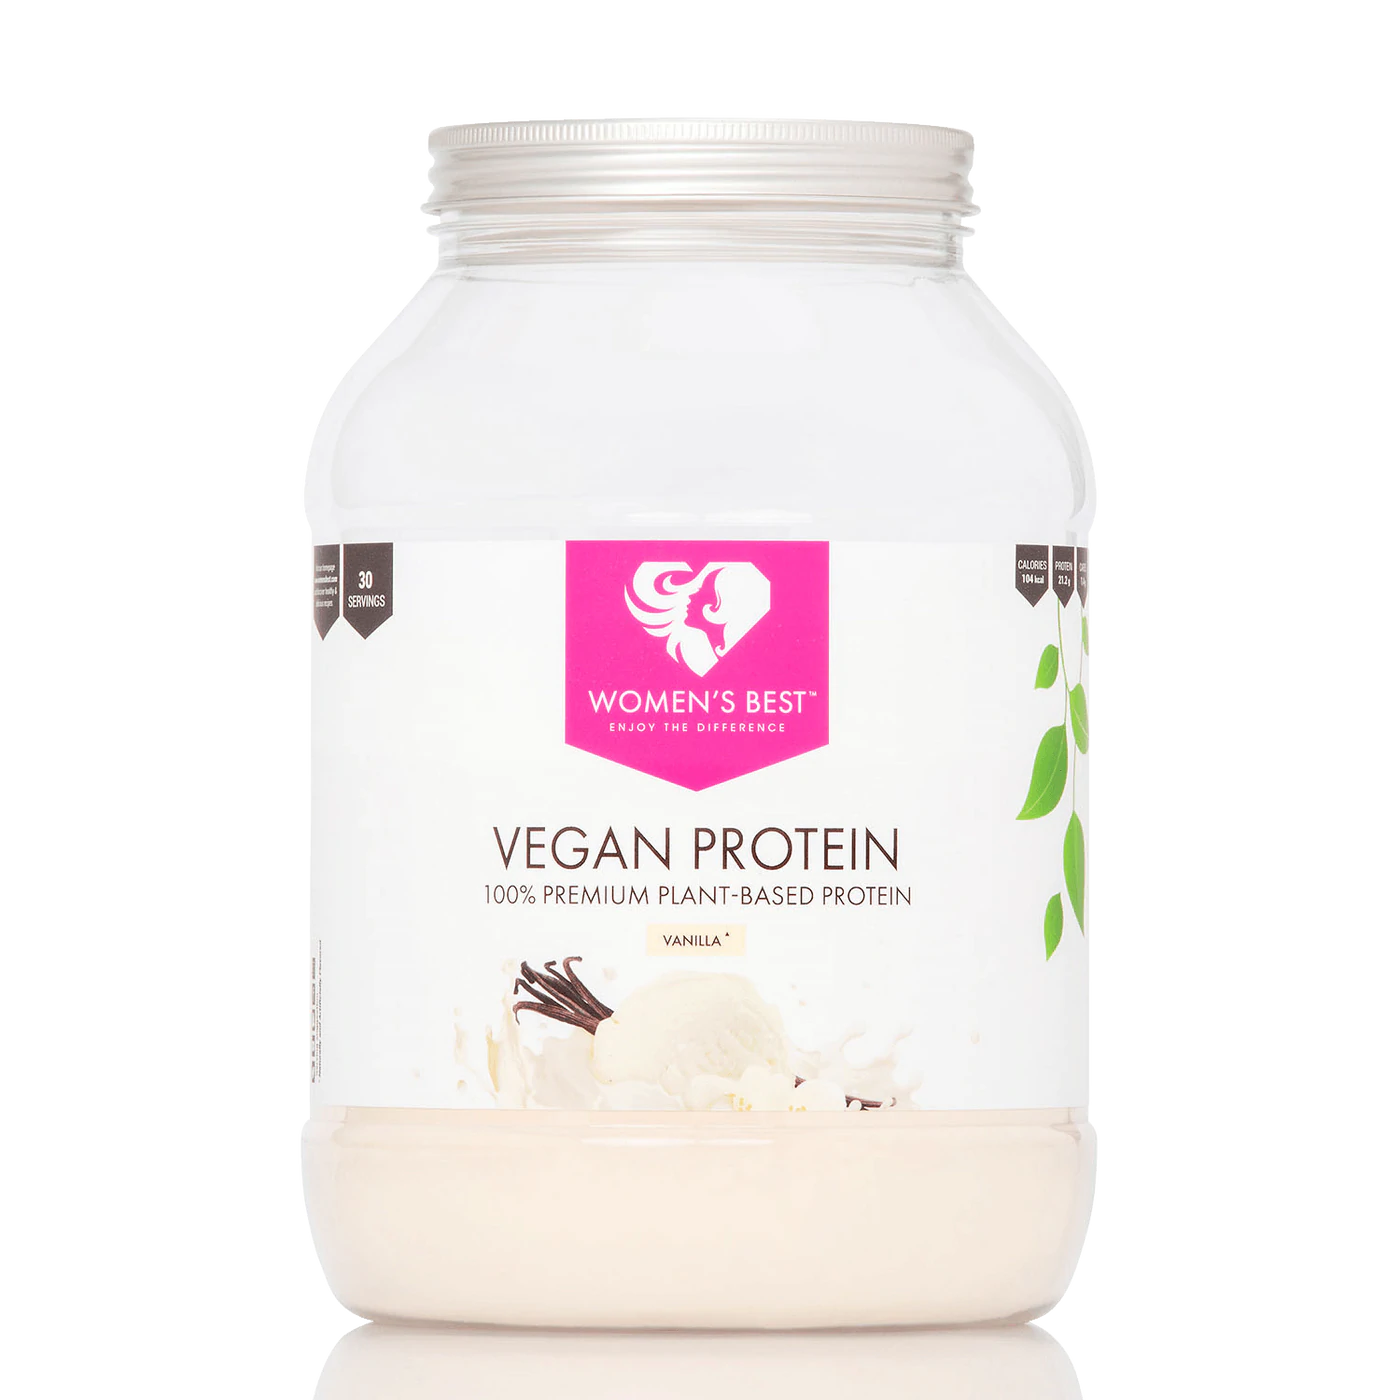 Women's Best - VEGAN PROTEIN VANILLA 100% vegan premium protein for optimum muscle growth